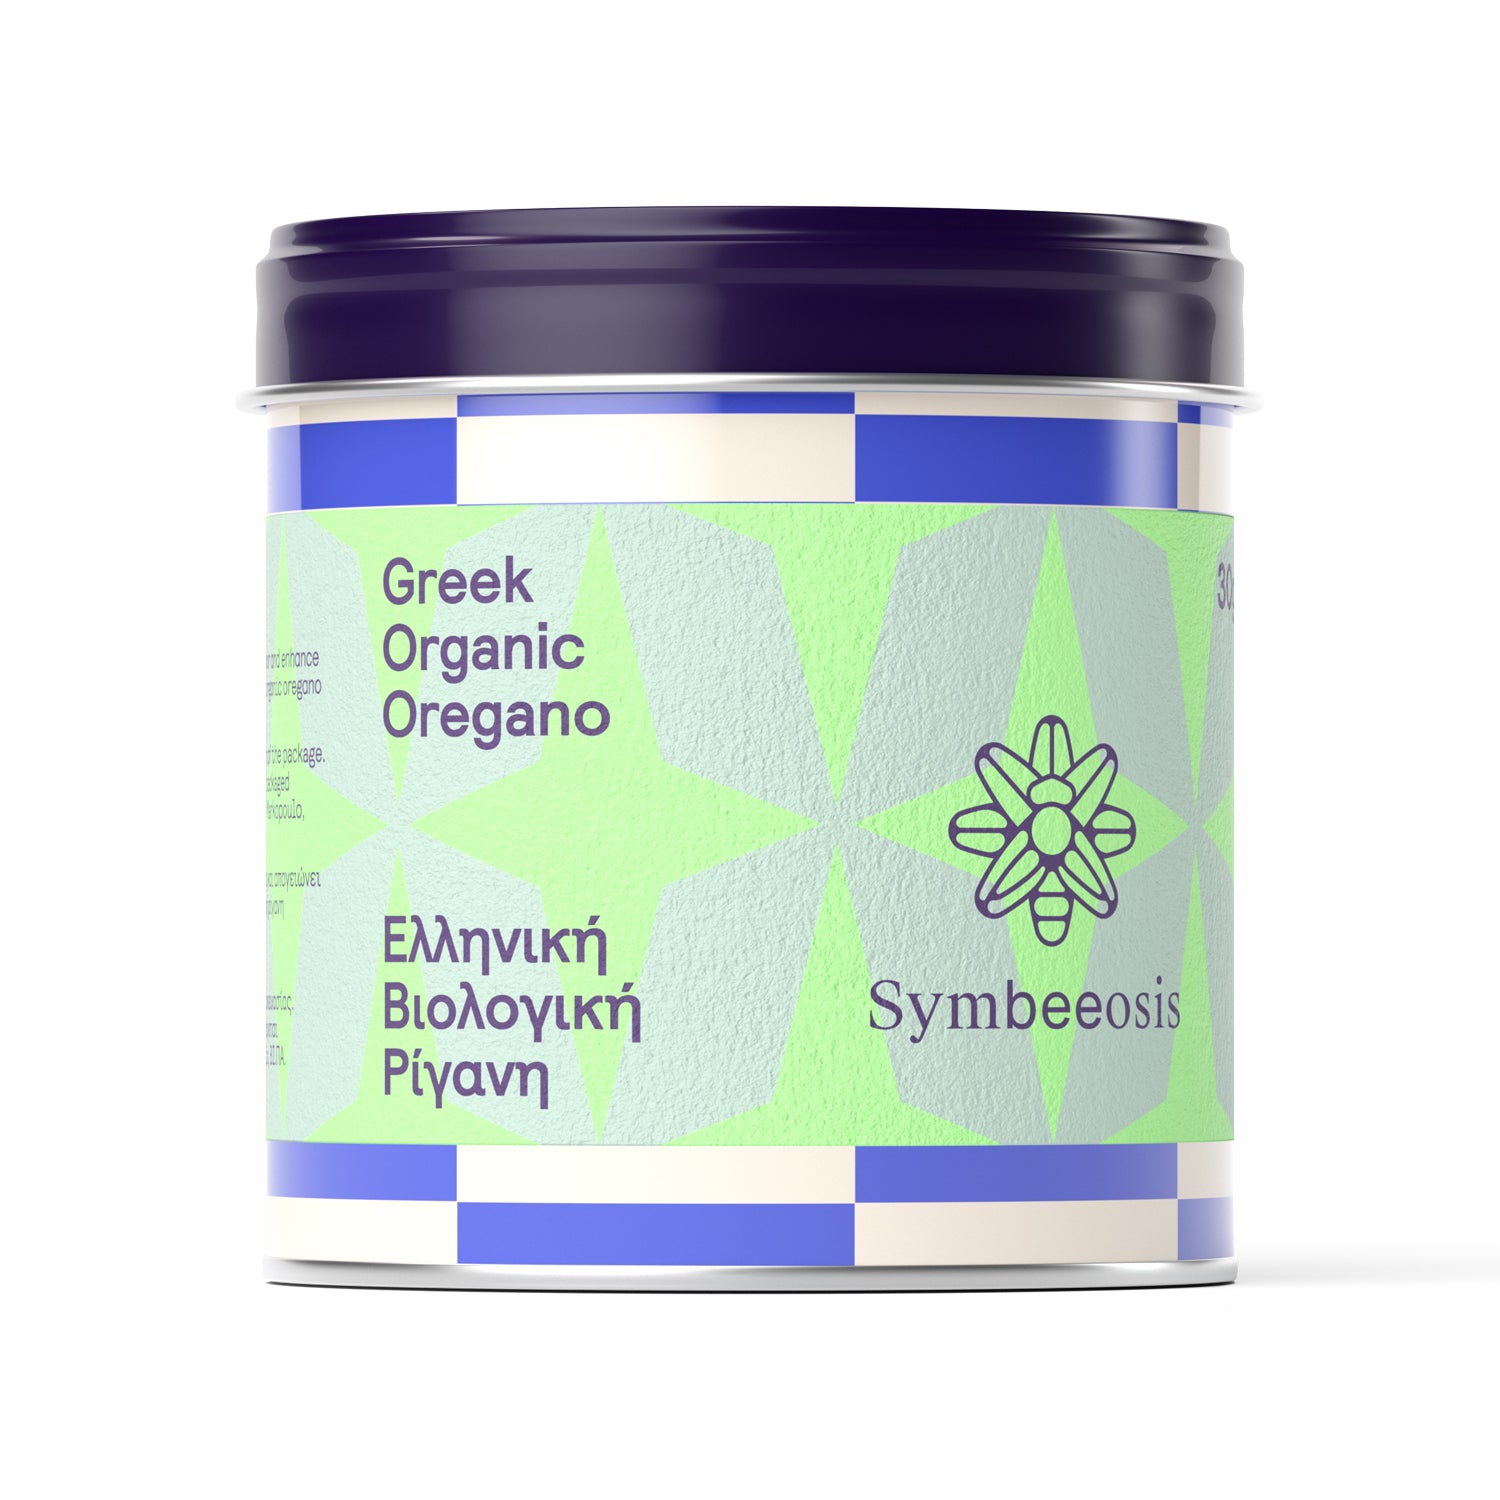 Greek Organic Oregano - 30g - Symbeeosis